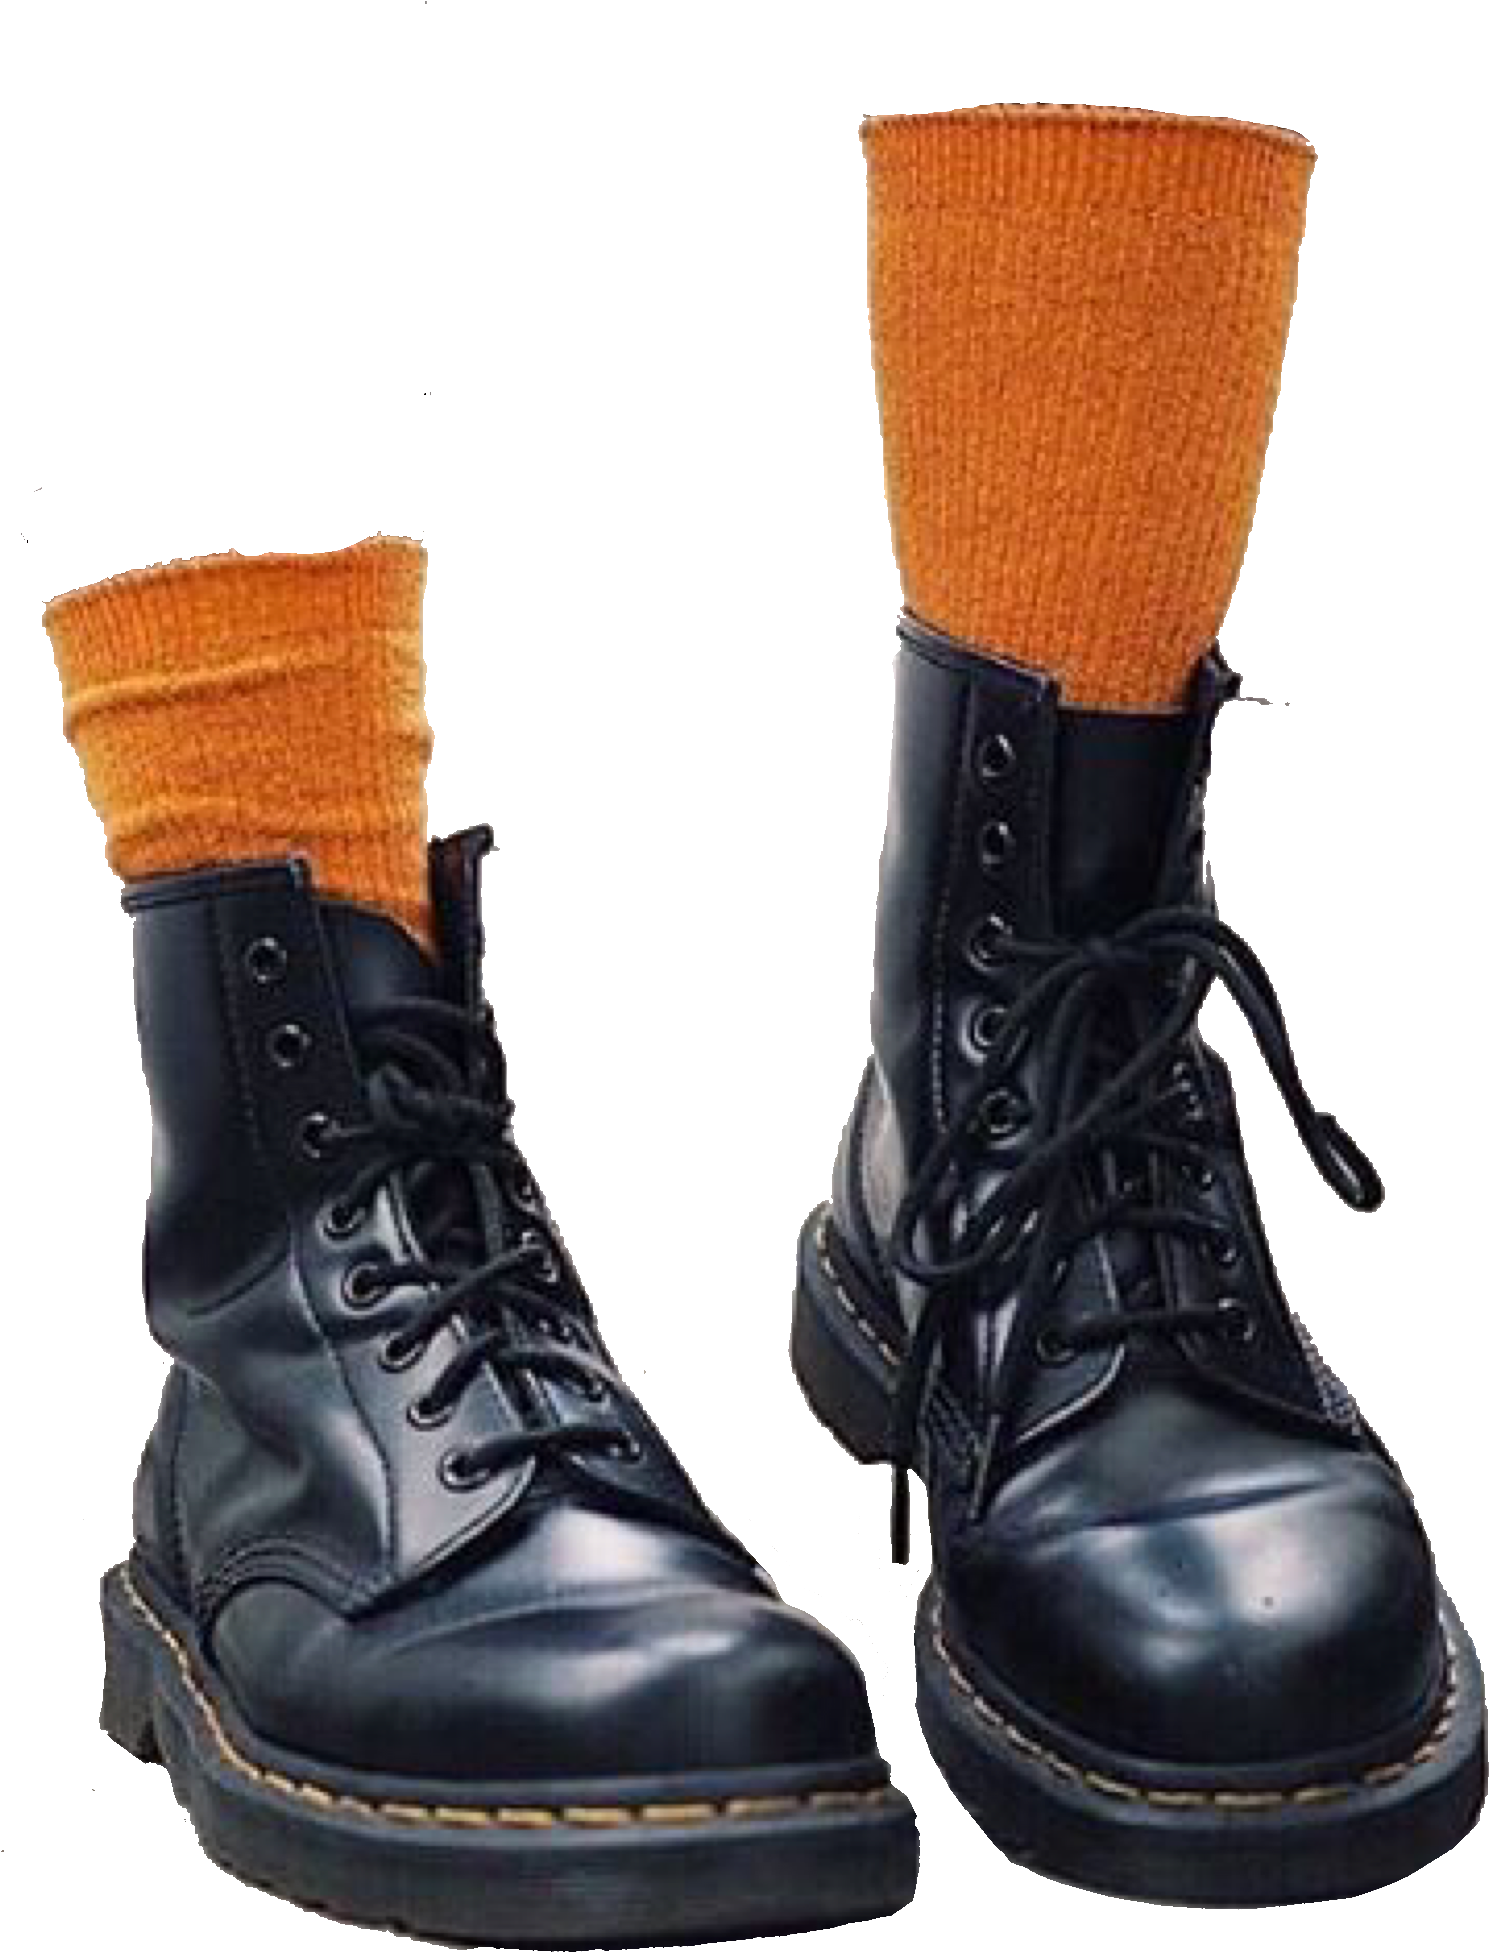 Black Boots With Orange Socks